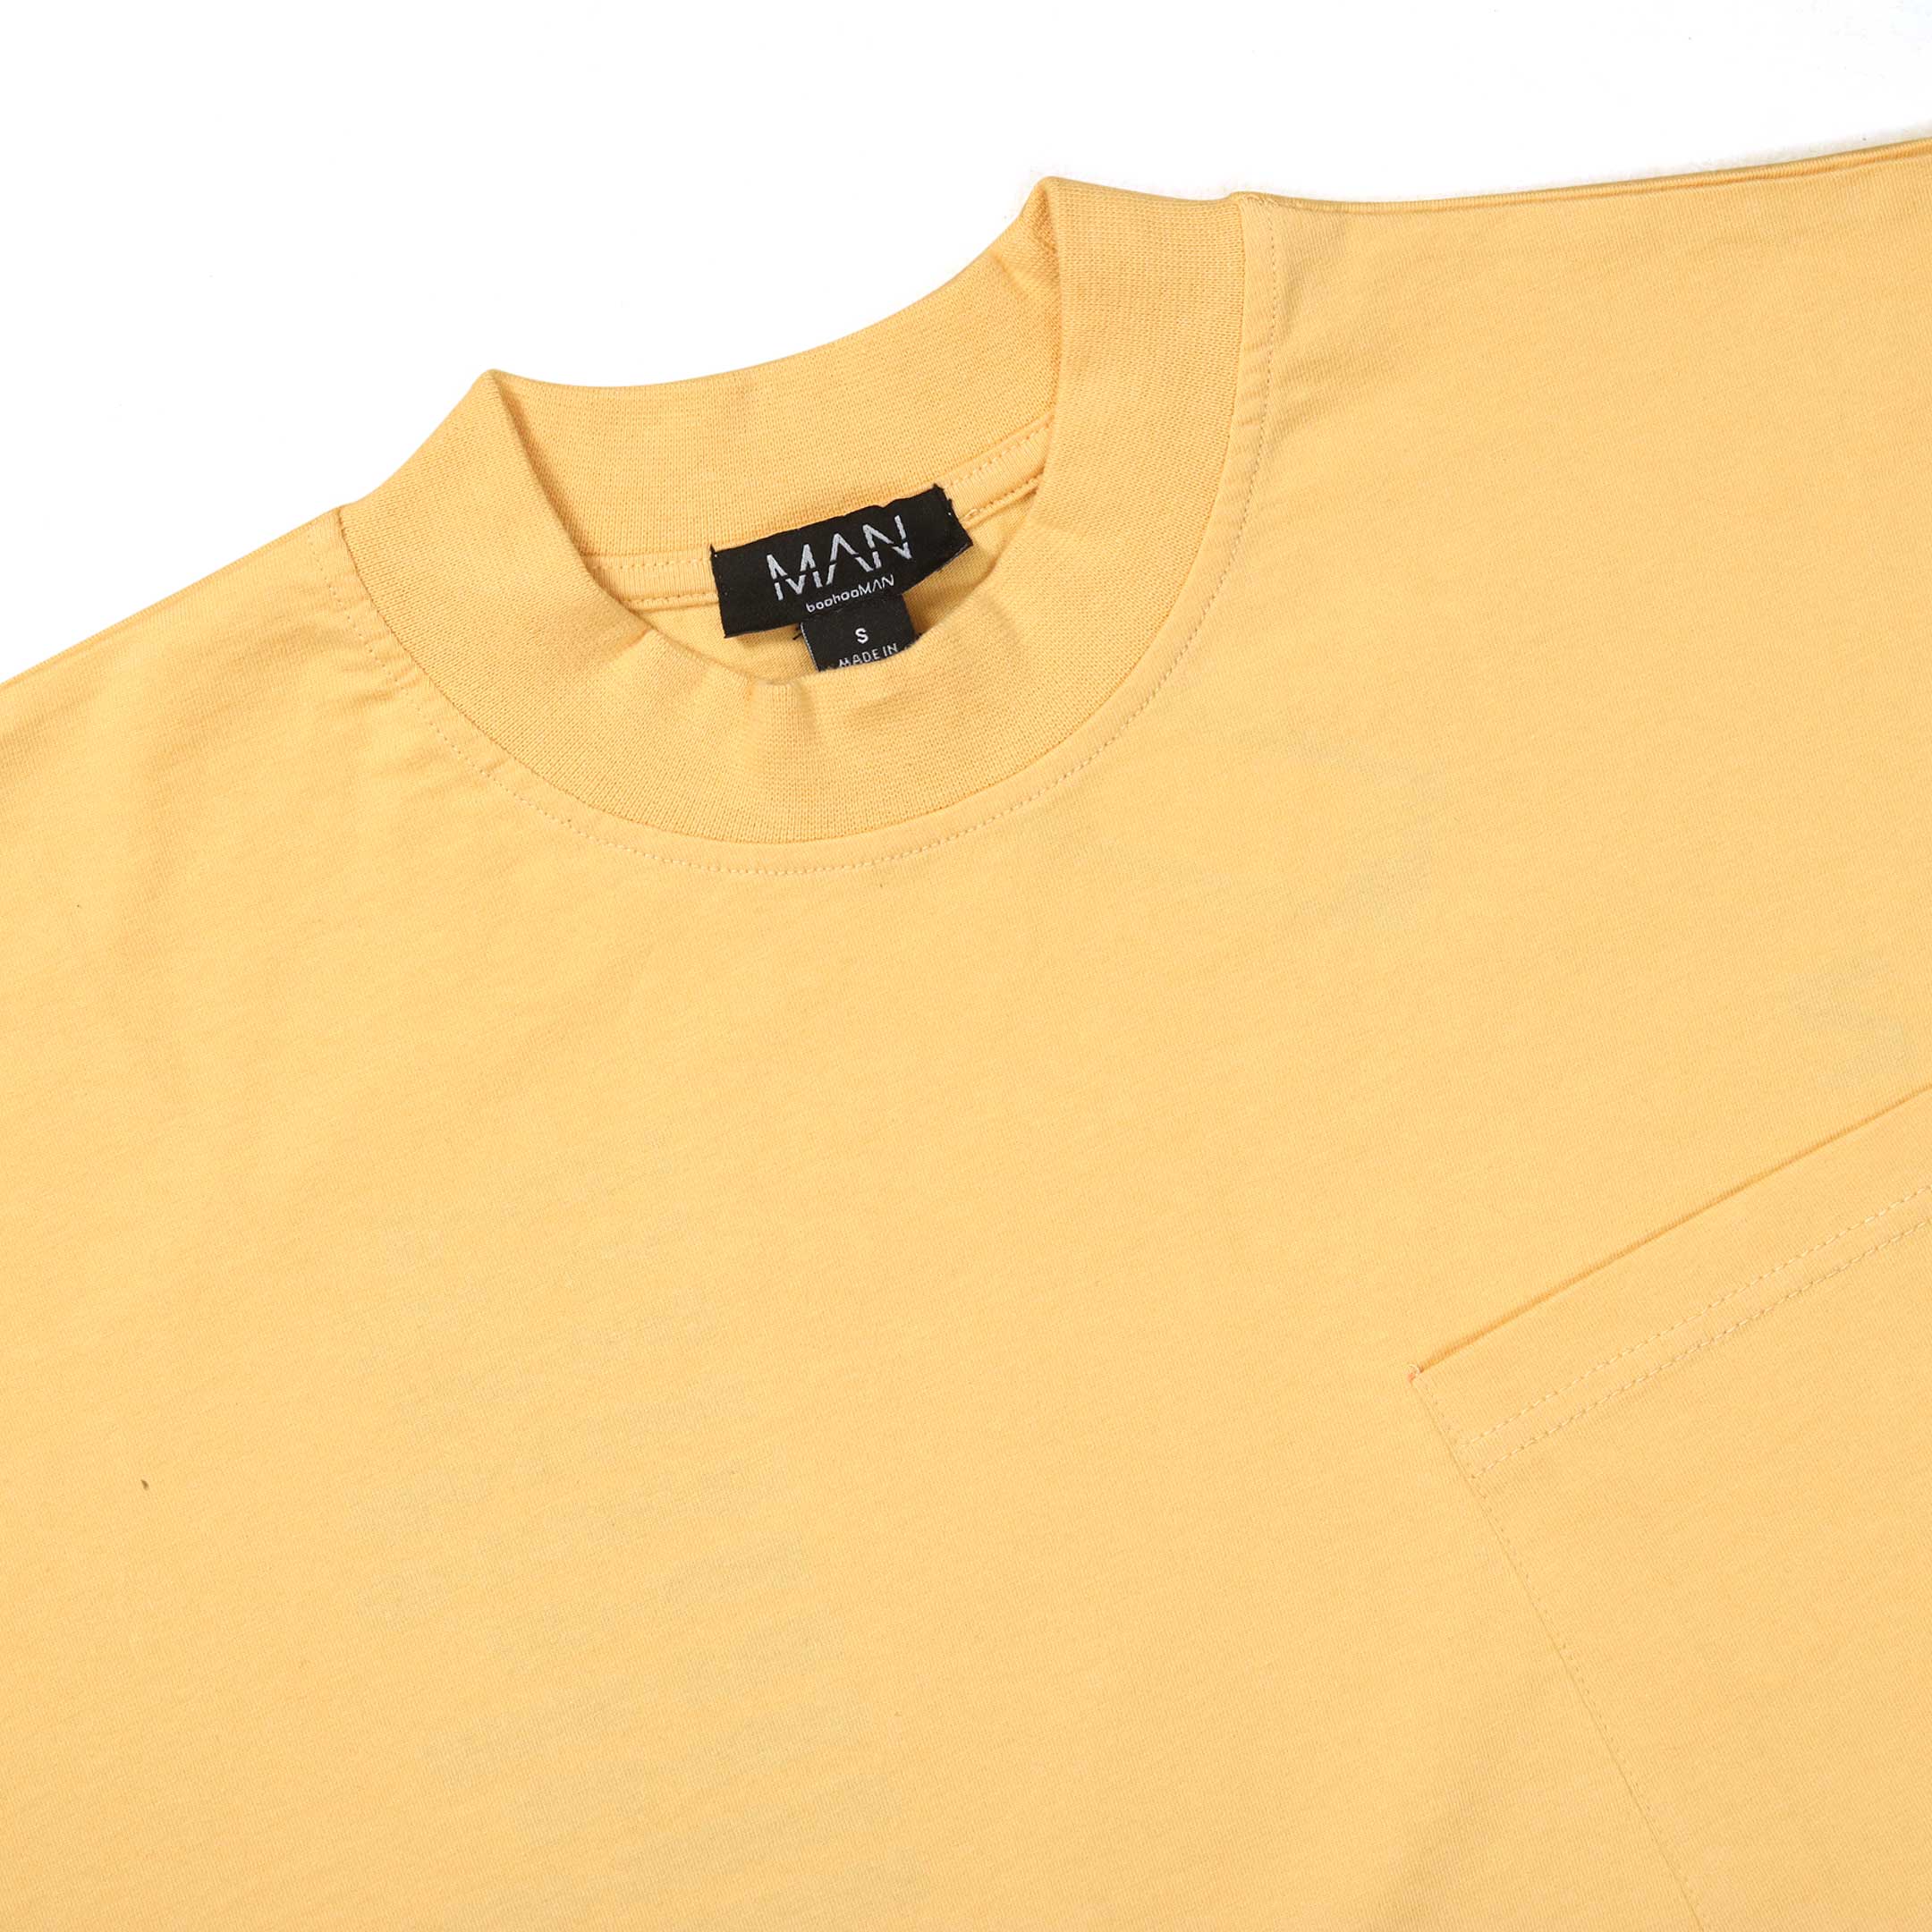 Boohoo Man T-Shirt Stone With Pocket Design